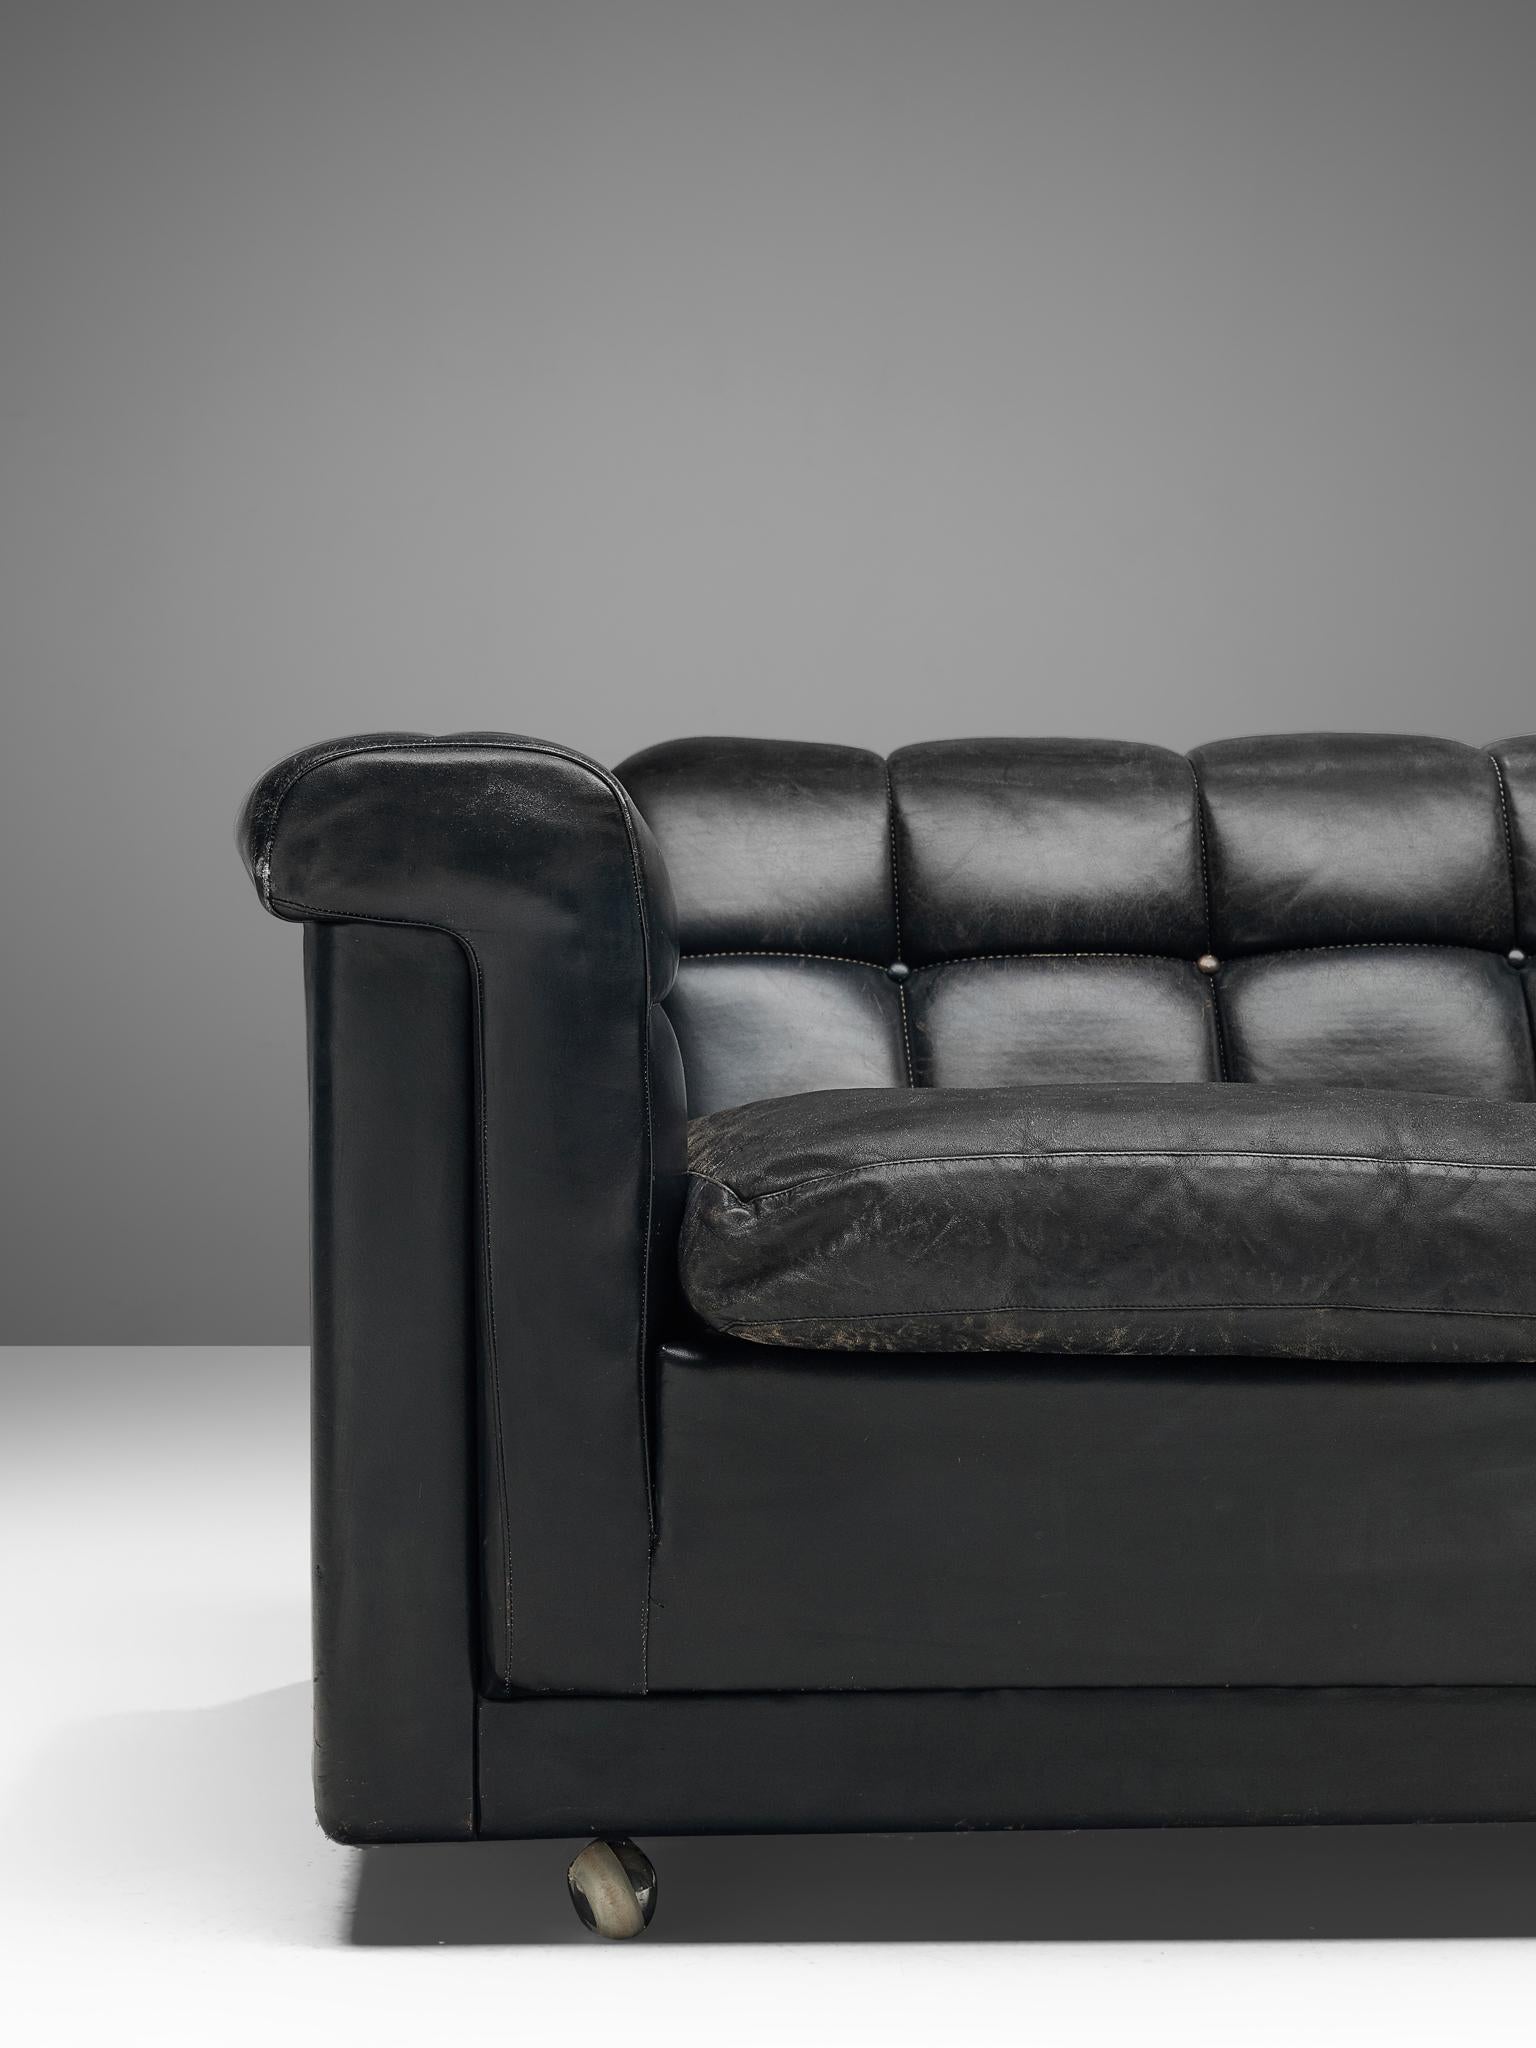 Metal Robert Haussmann Tufted Four-Seat Sofa in Black Leather